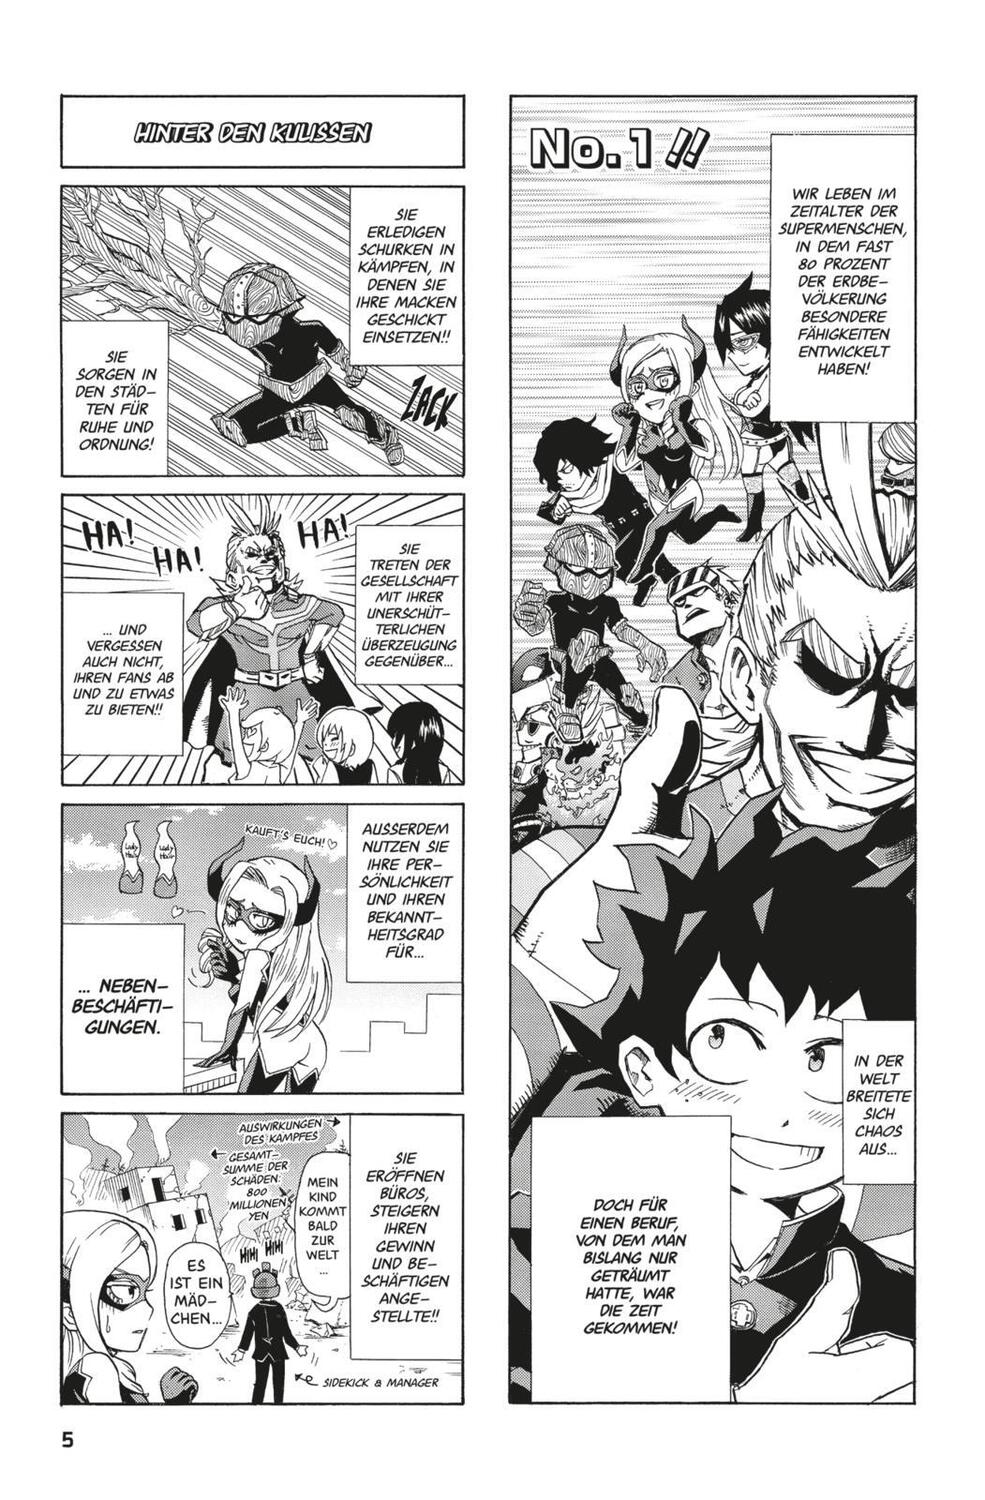 Bild: 9783551755964 | My Hero Academia Smash 1 | Kohei Horikoshi (u. a.) | Taschenbuch